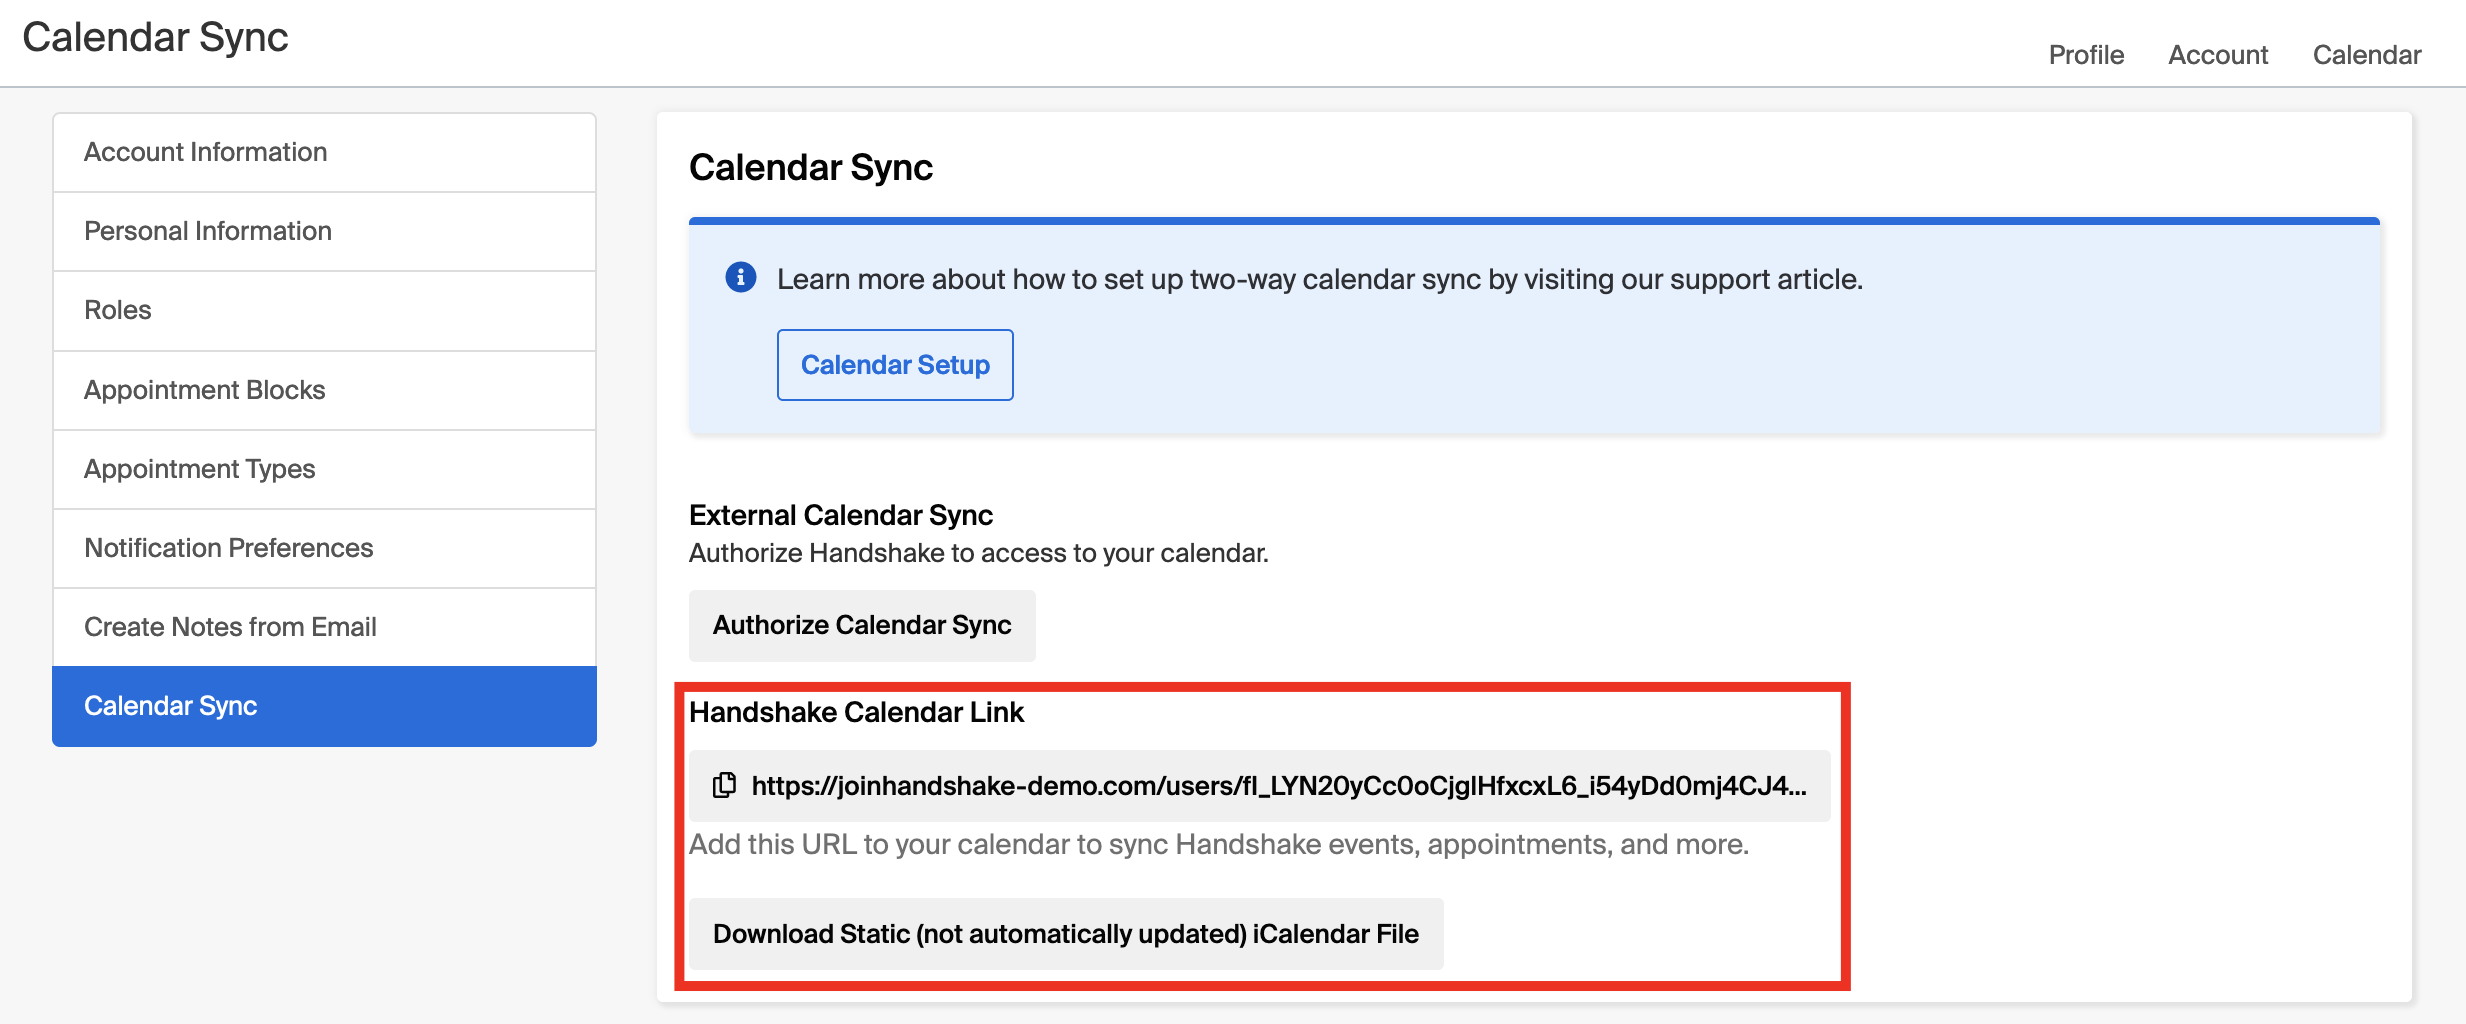 Calendar_Sync_Link_and_Download_iCalendar_File_option.png